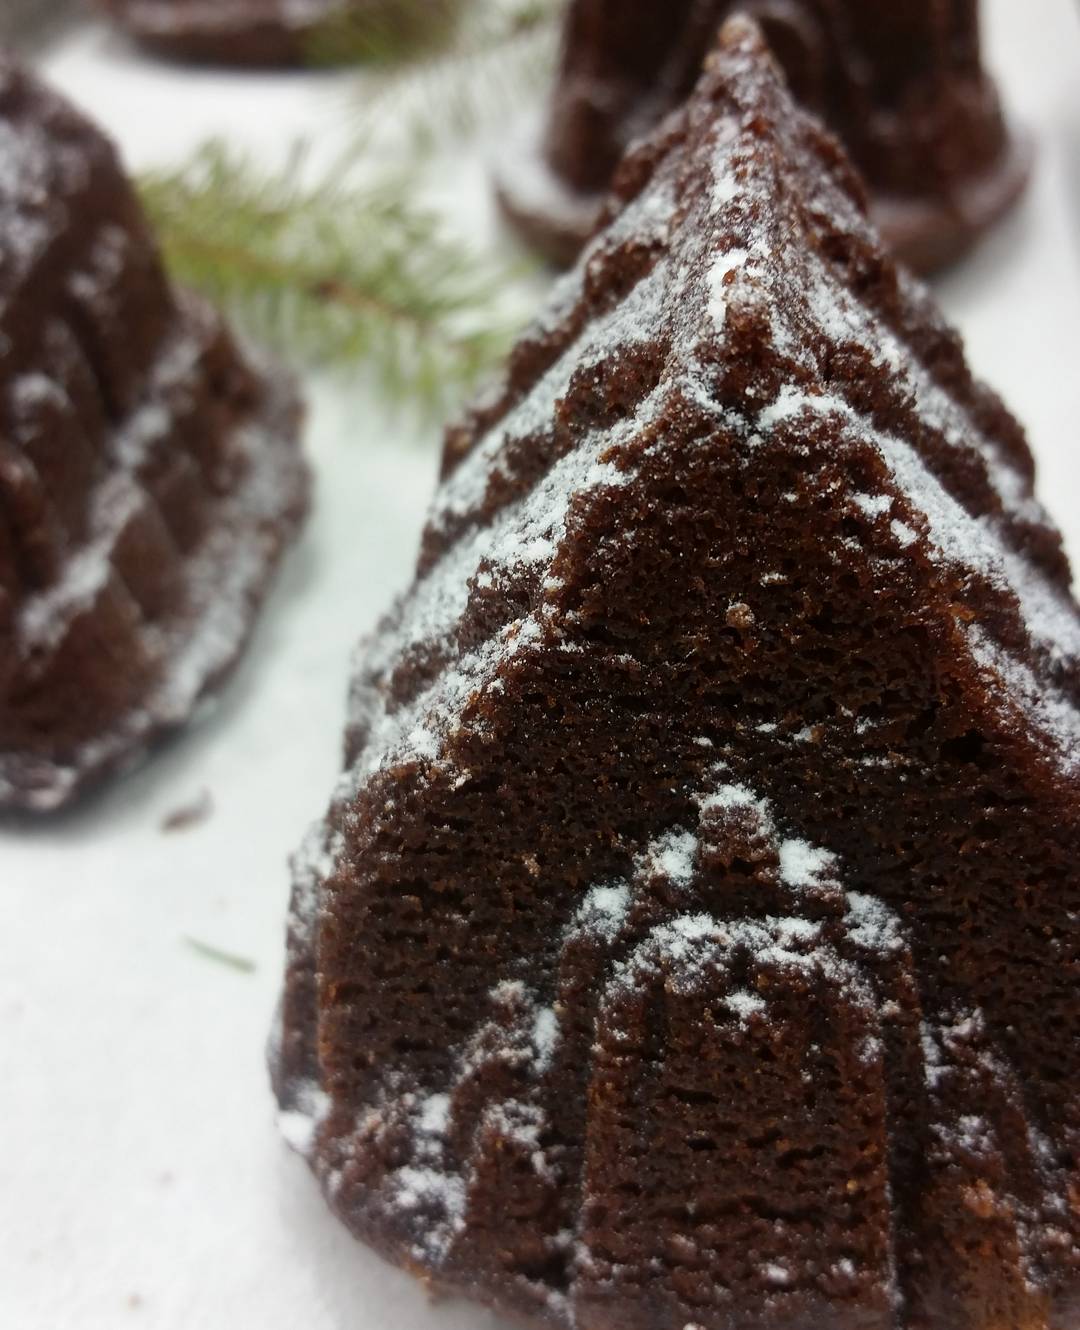 Gingerbread Loaf 😊 Perfect for that Luncheon, Party, Hostess Gift! Ready Same Day! 405 430 5484
@bellekitchenokc #fresh #real #handmade #eeeeeats #pastry #gingerbreadhouse #gingerbread #instagood #foodporn #instafood #zagat #buzzfeedfood #instadessert #keepitlocalok #OKC #okcmoms #okcmom #Christmas #yummy #nomnom #beautiful #bellekitchen